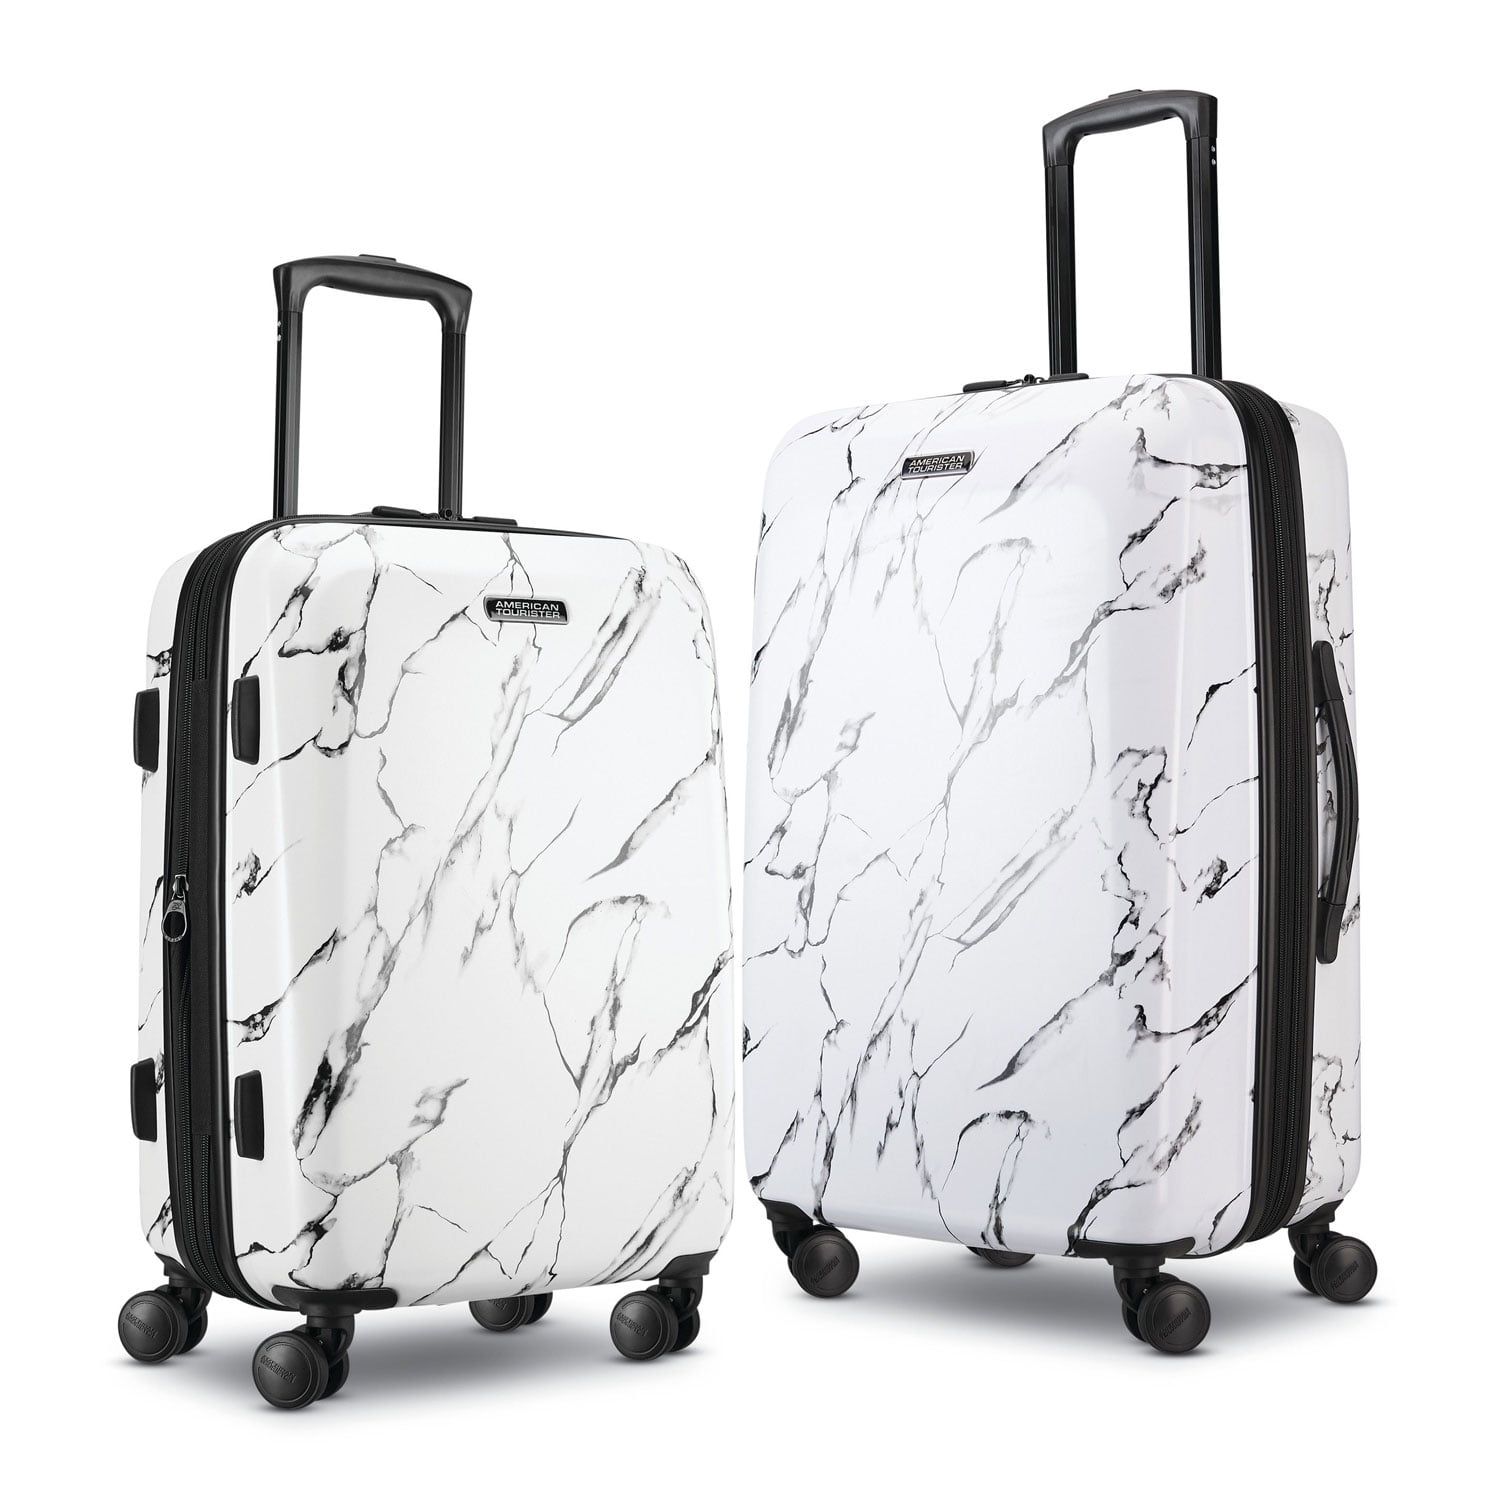 American Tourister Moonlight Plus 2pc Hardside Expandable Luggage